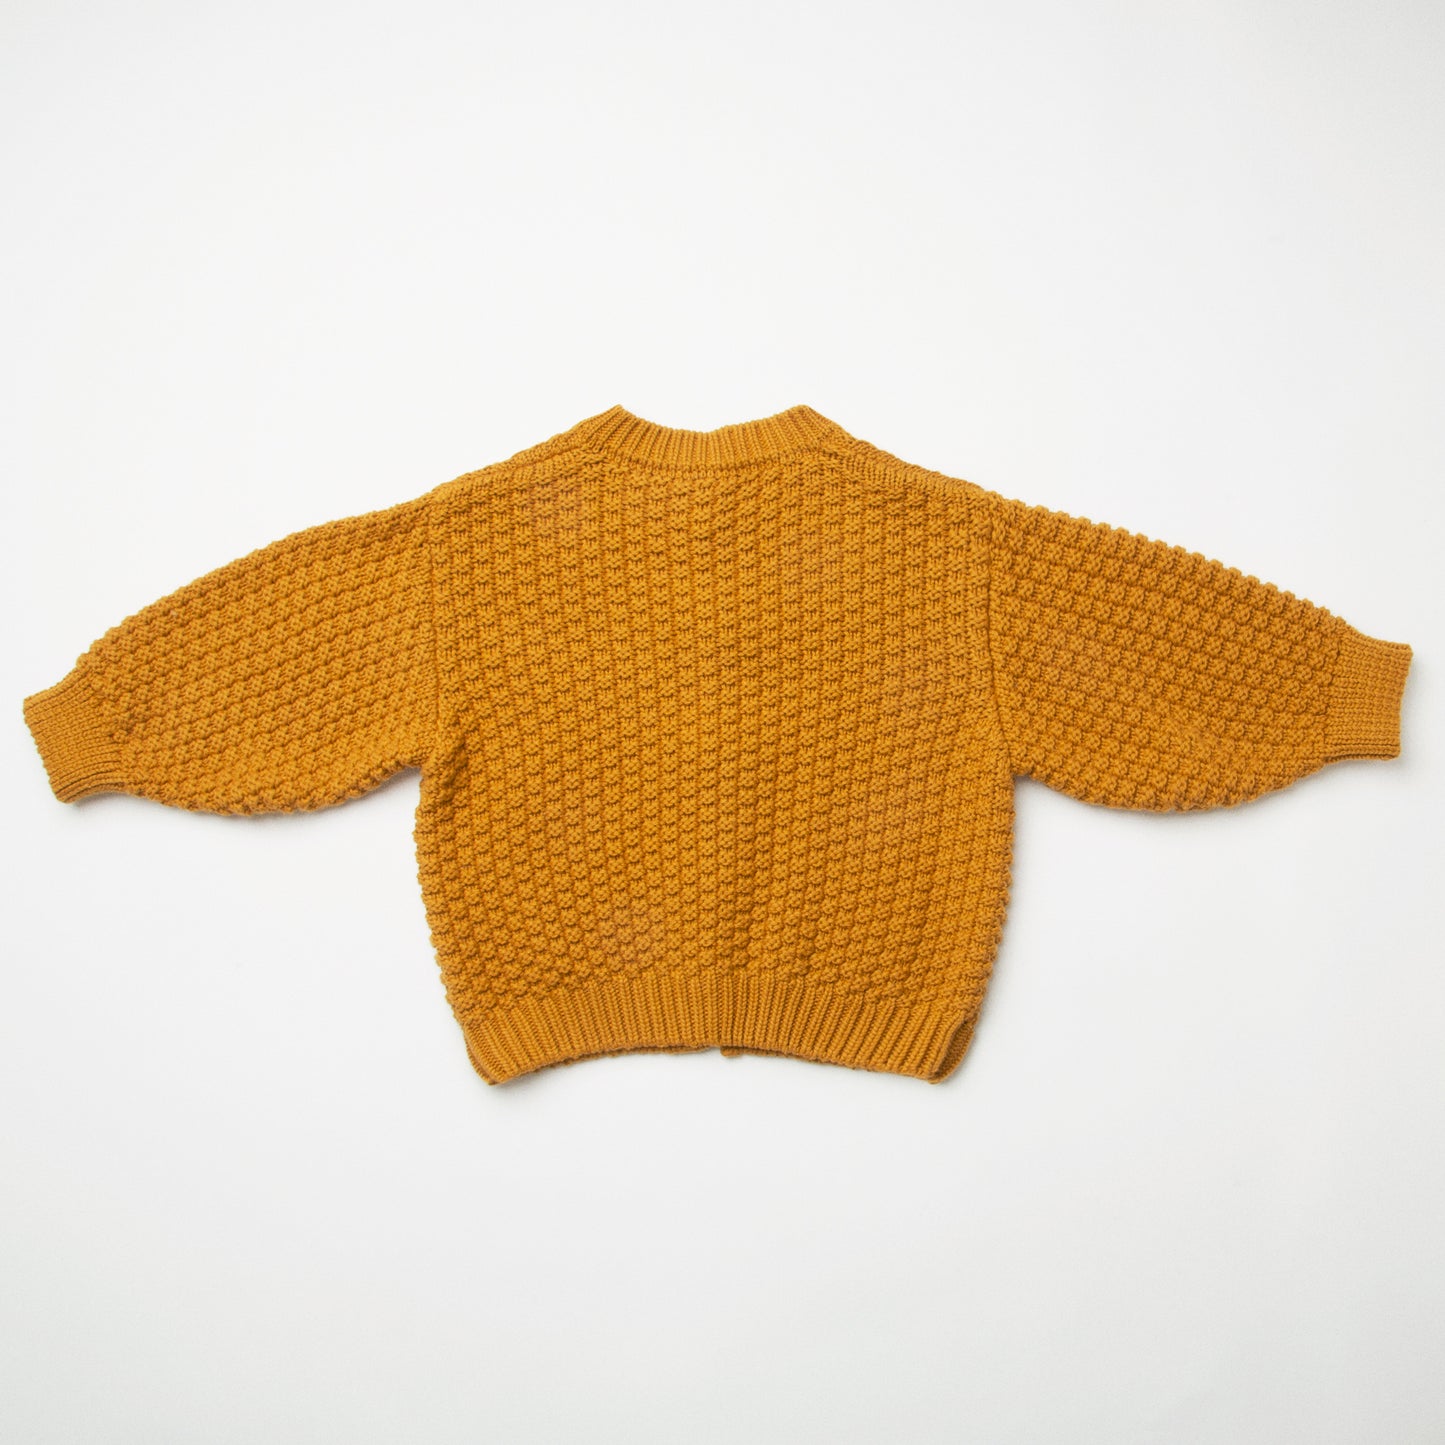 Twister Cardigan - Mustard Organic Cotton Knit